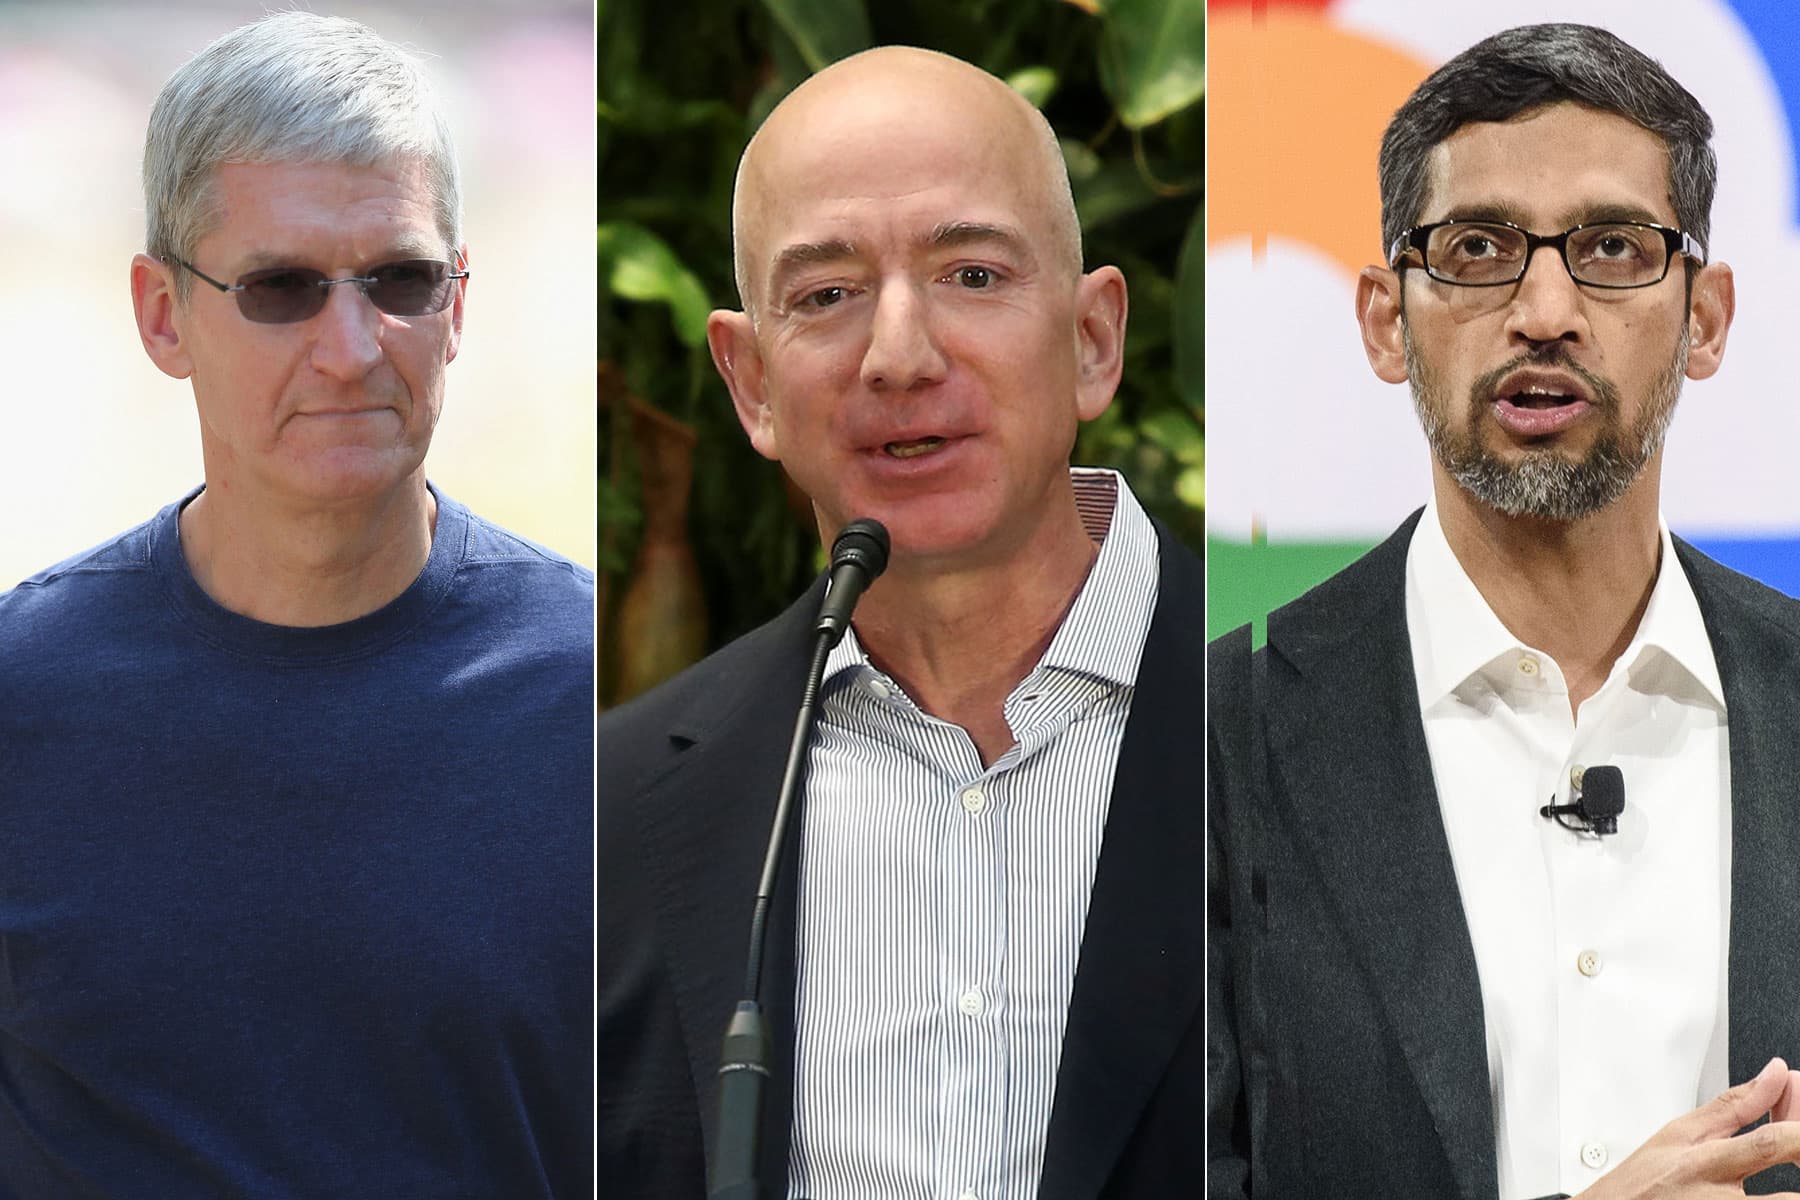 Lawmakers unveil major bipartisan antitrust reforms that could reshape Amazon, Apple, Facebook and Google